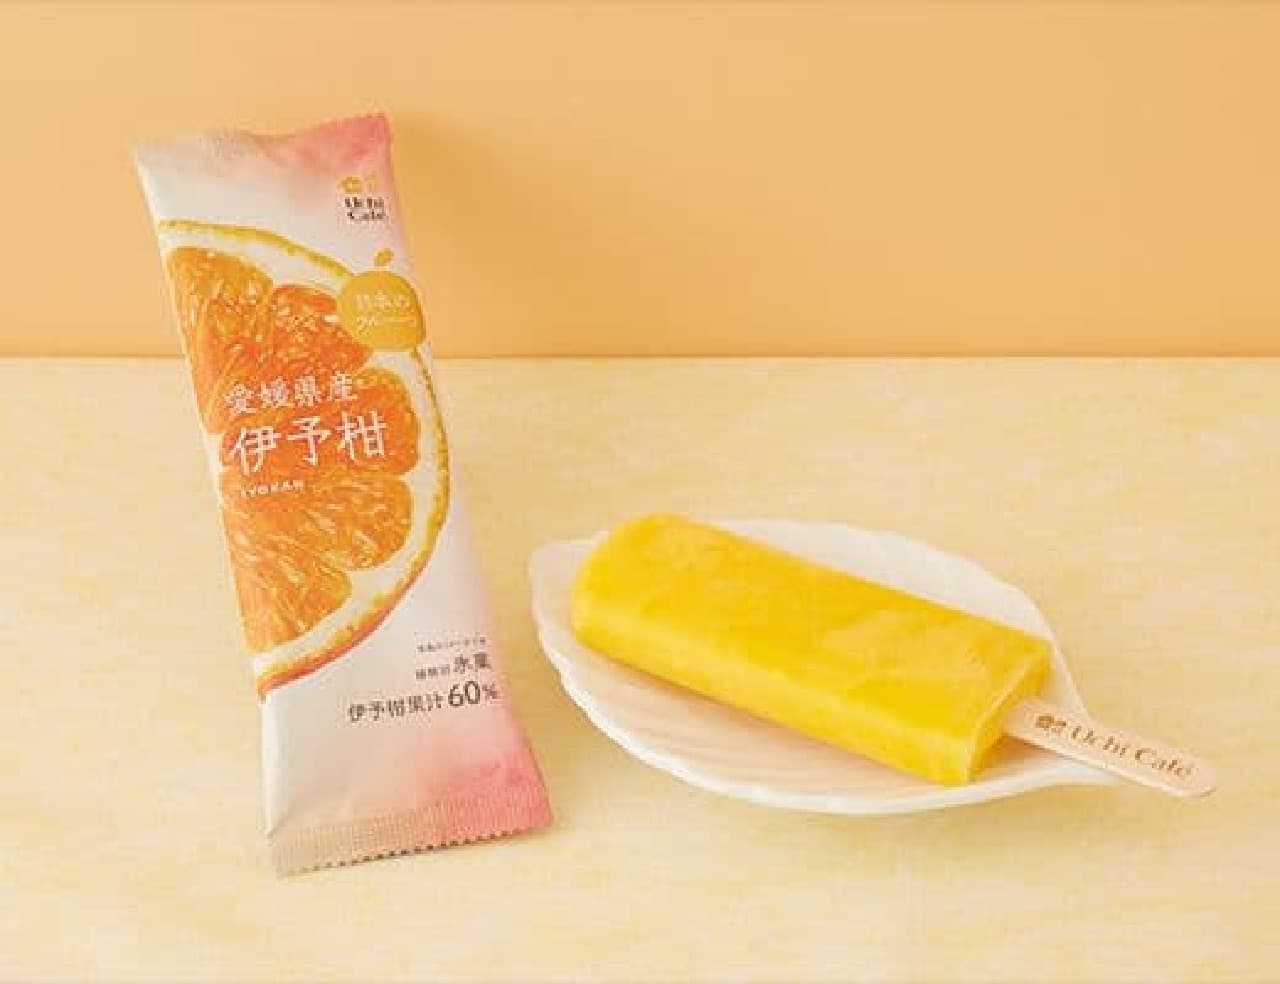 LAWSON "Uchicaffe Japanese Fruit: Ehime Iyokan 80ml